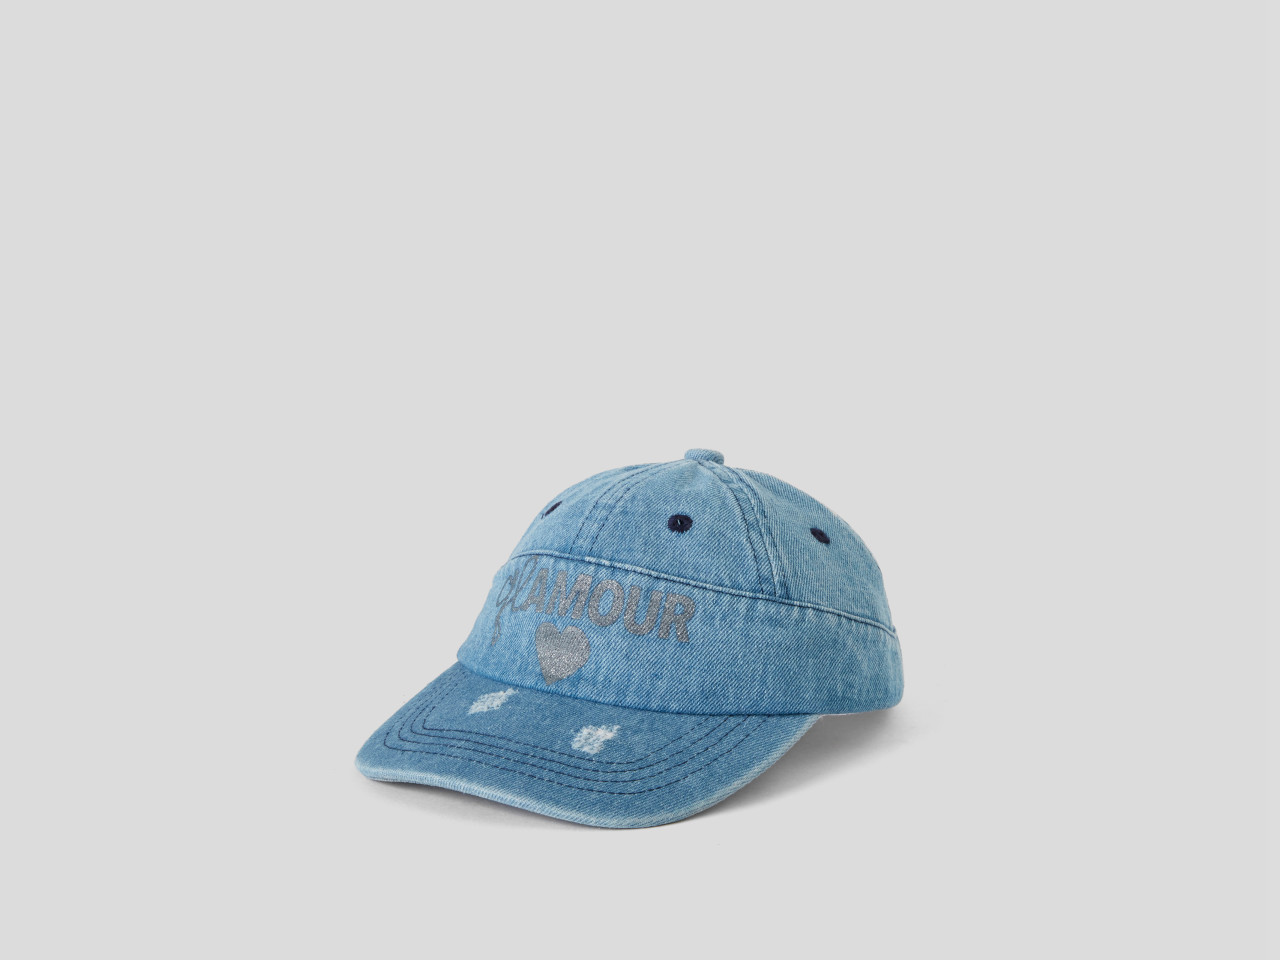 Benetton Kids Boy's Tween Jeans Hats & Caps baseball cap Blue Cotton 45 